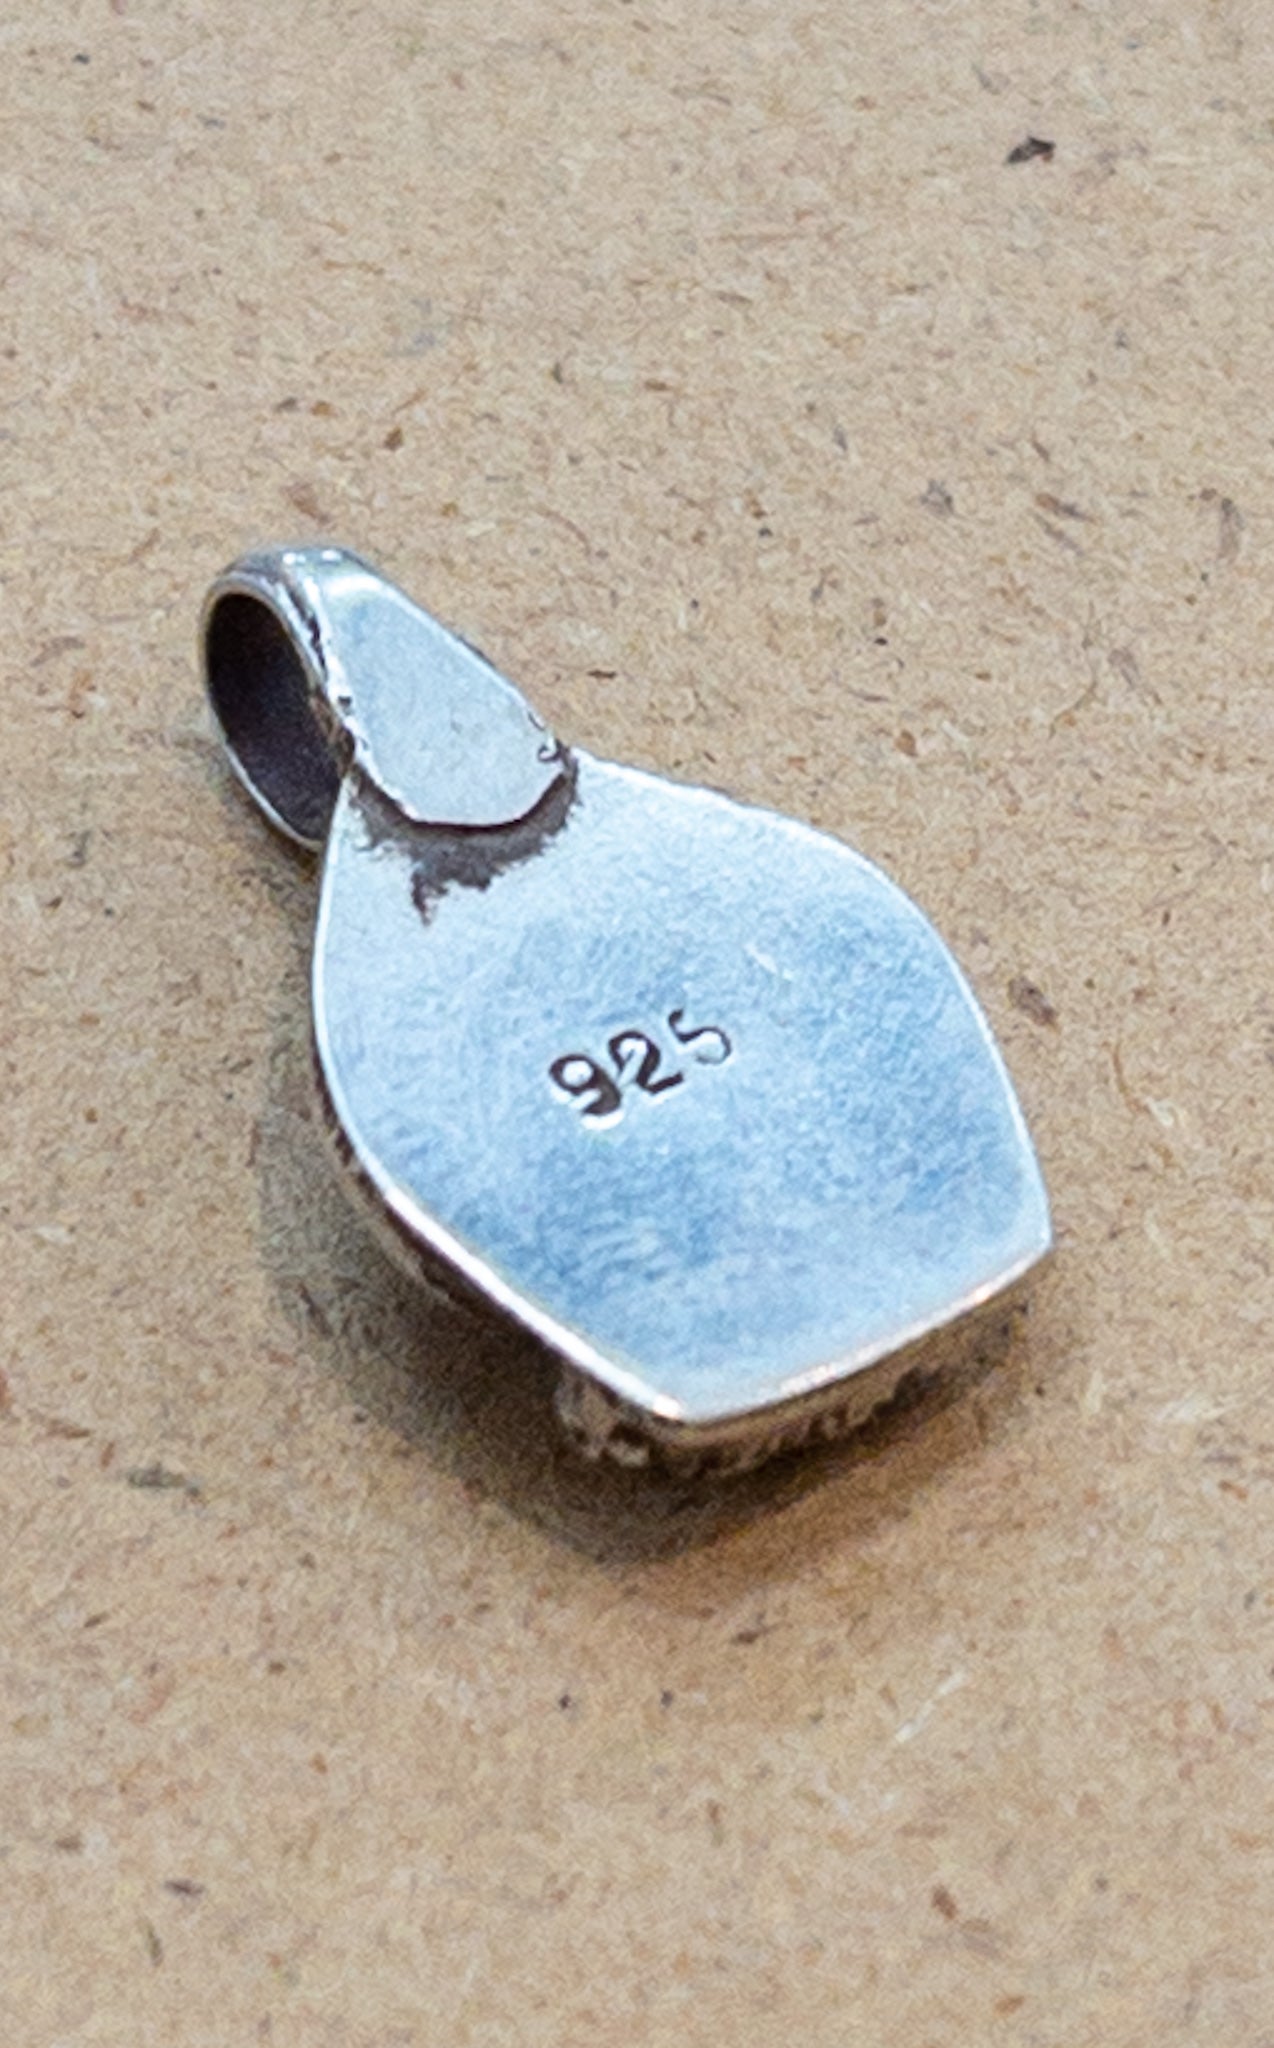 Buddha Sterling Silver Pendant